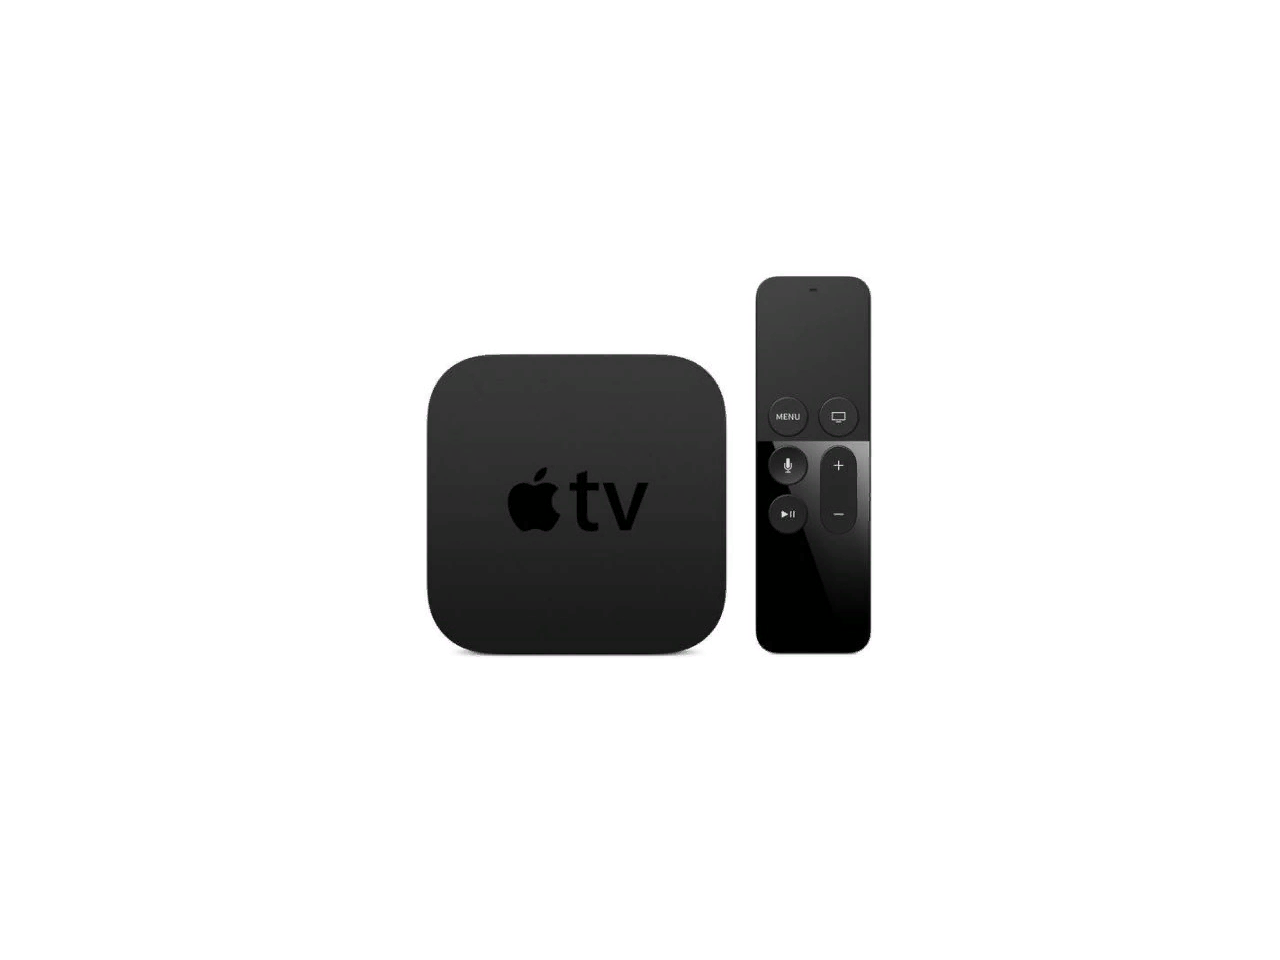 Apple Tv Black 32gb 4th Generation 1080p Wireless Multimedia Streamer With Siri Remote 1462